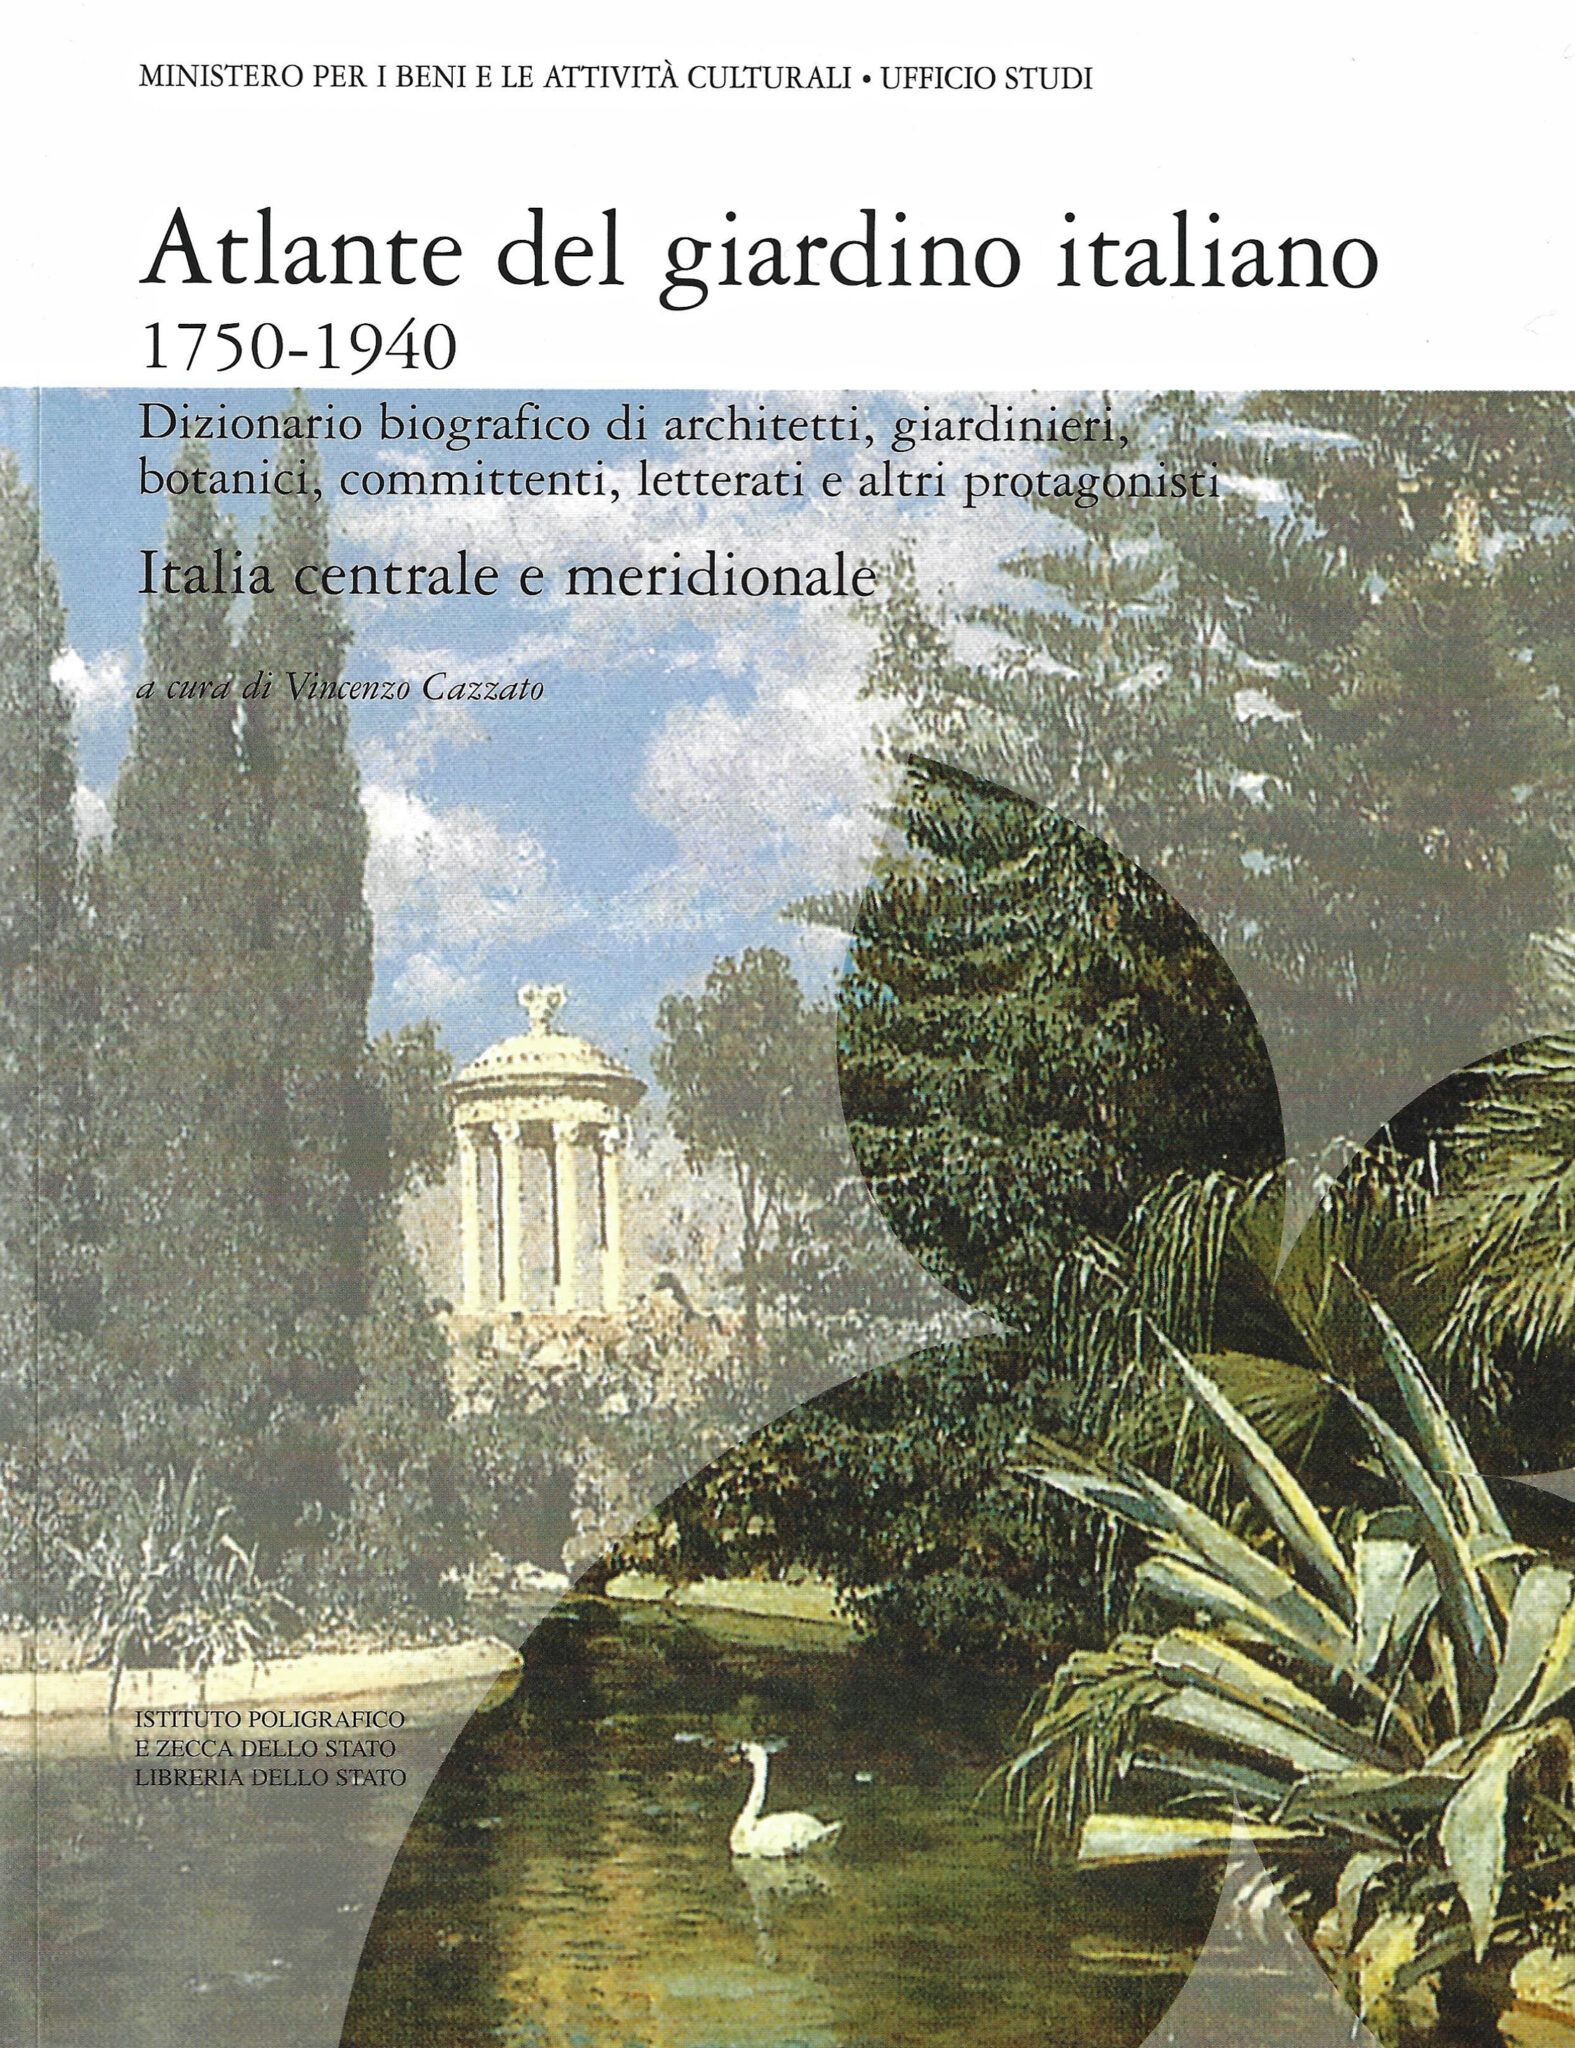 libro_atlante del giardino Italiano